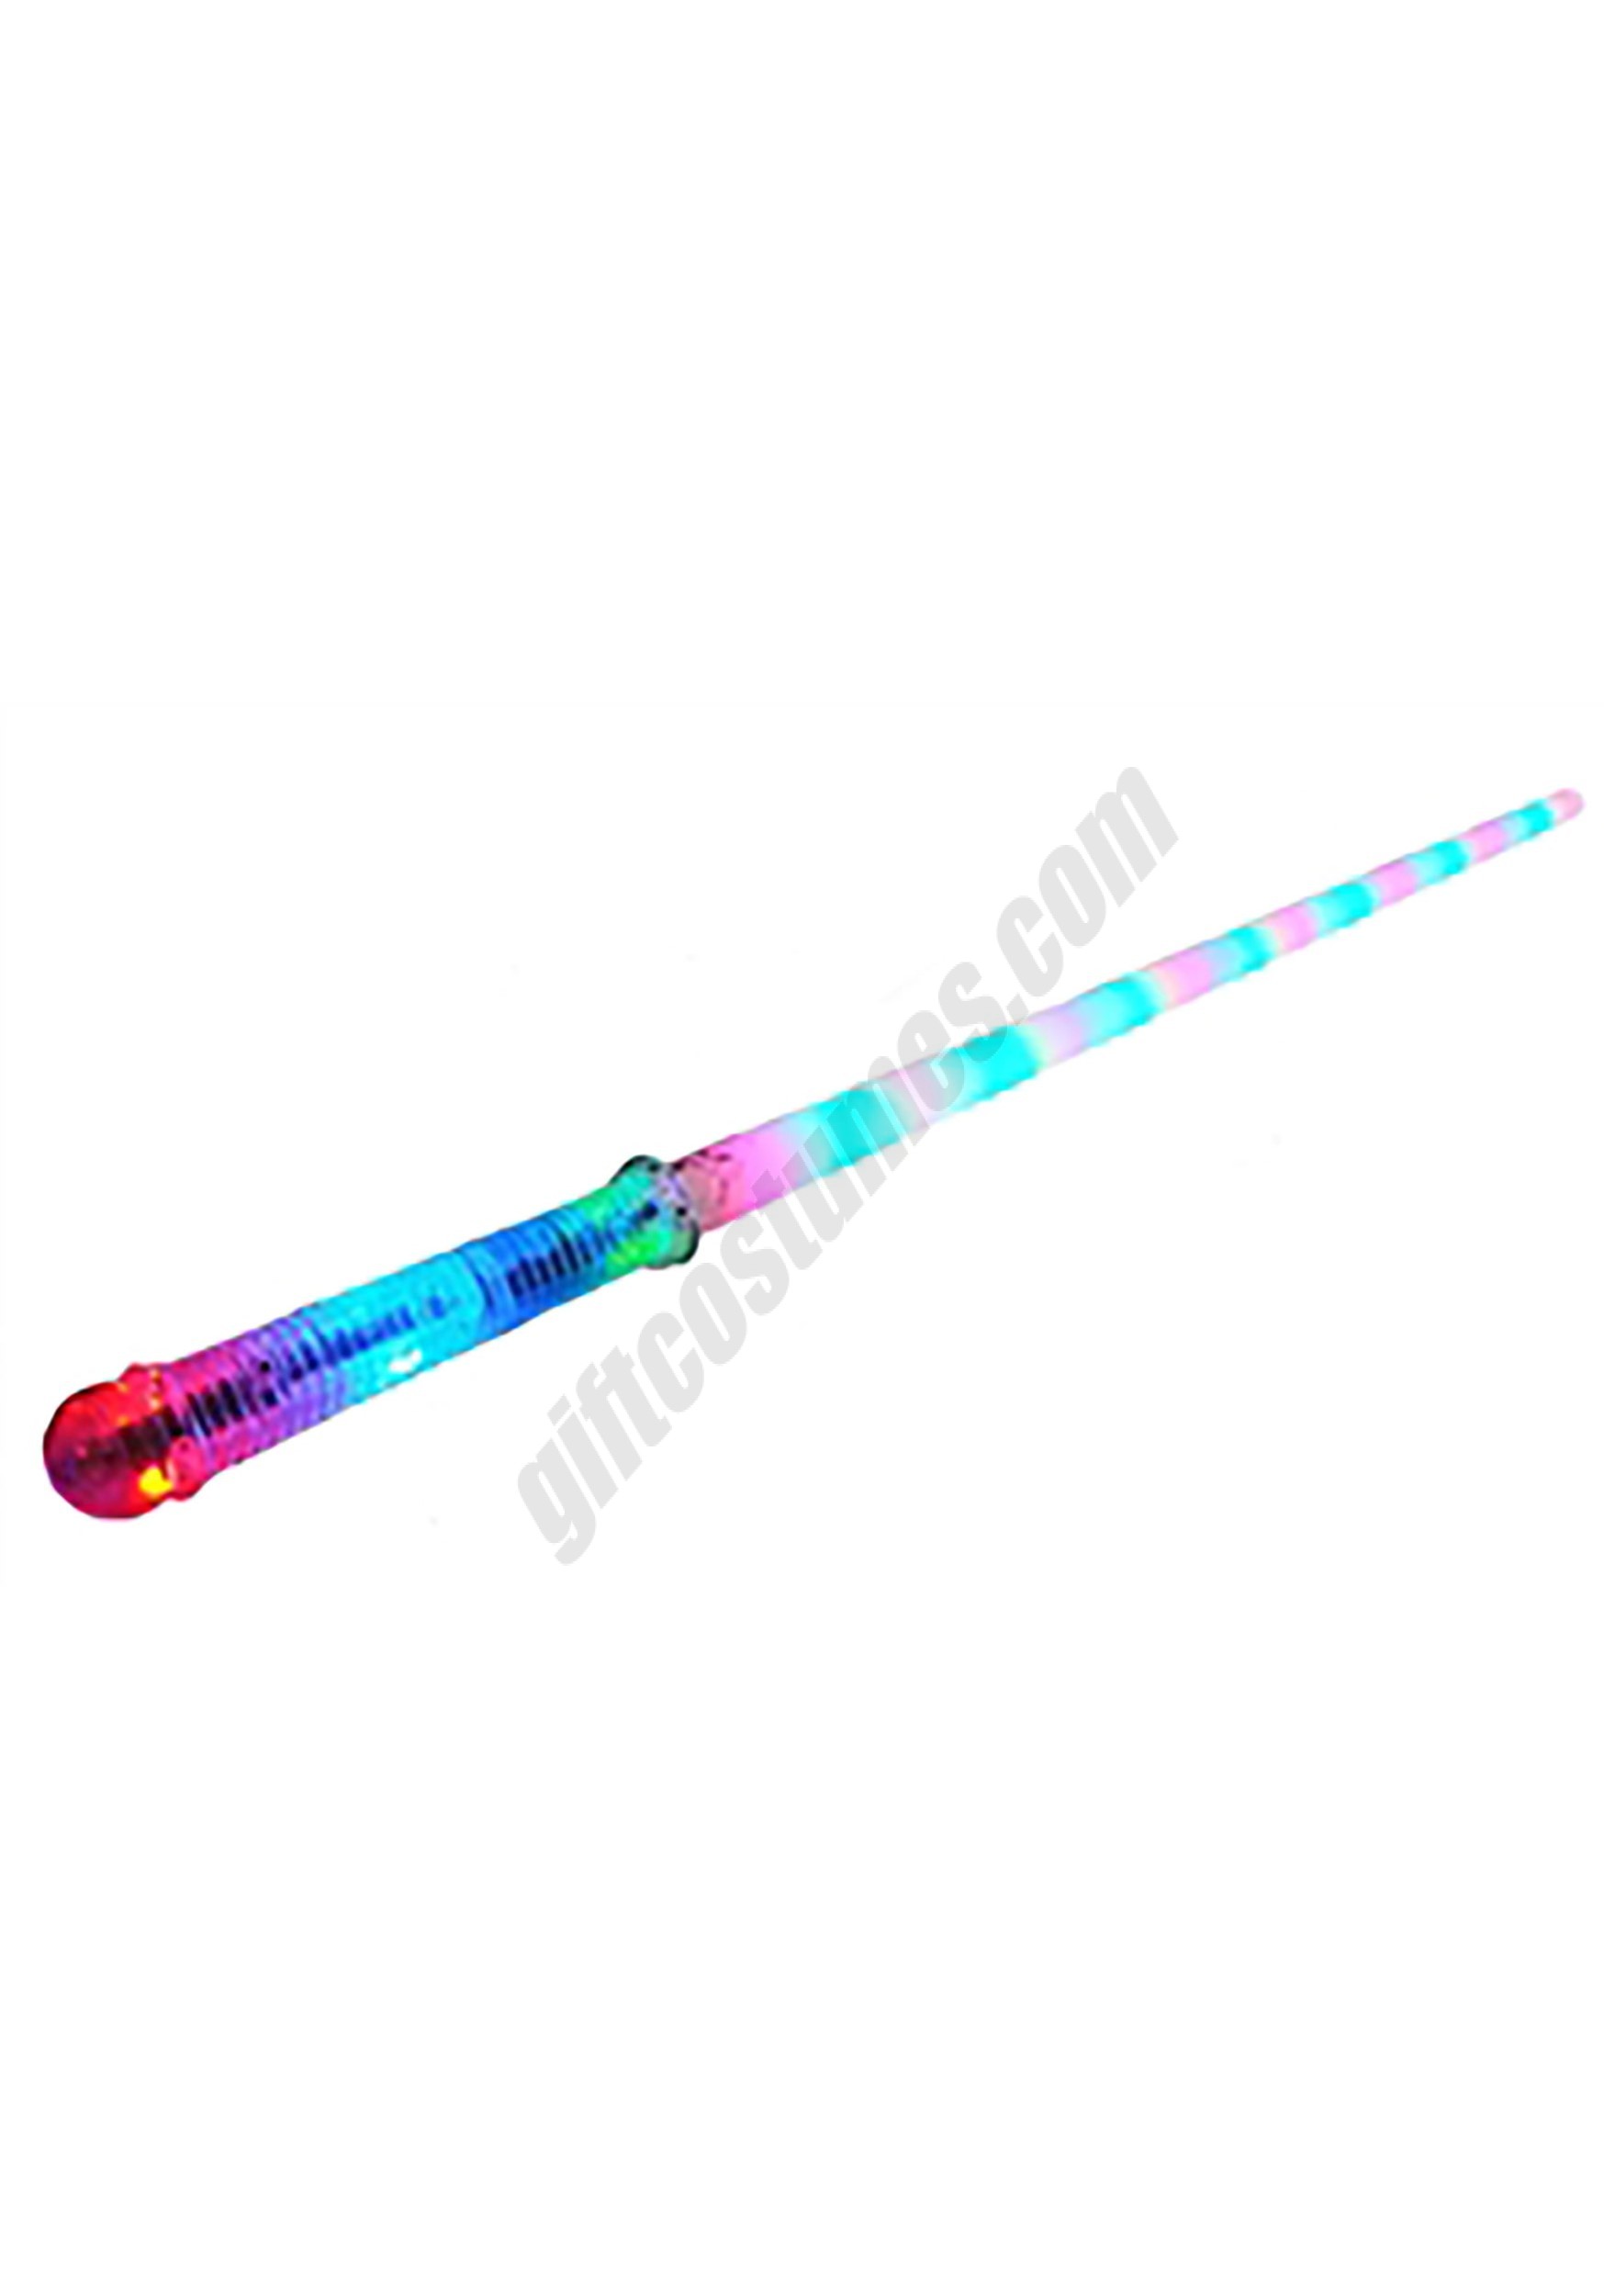 Multicolor Sword w/ Light Handle Promotions - Multicolor Sword w/ Light Handle Promotions